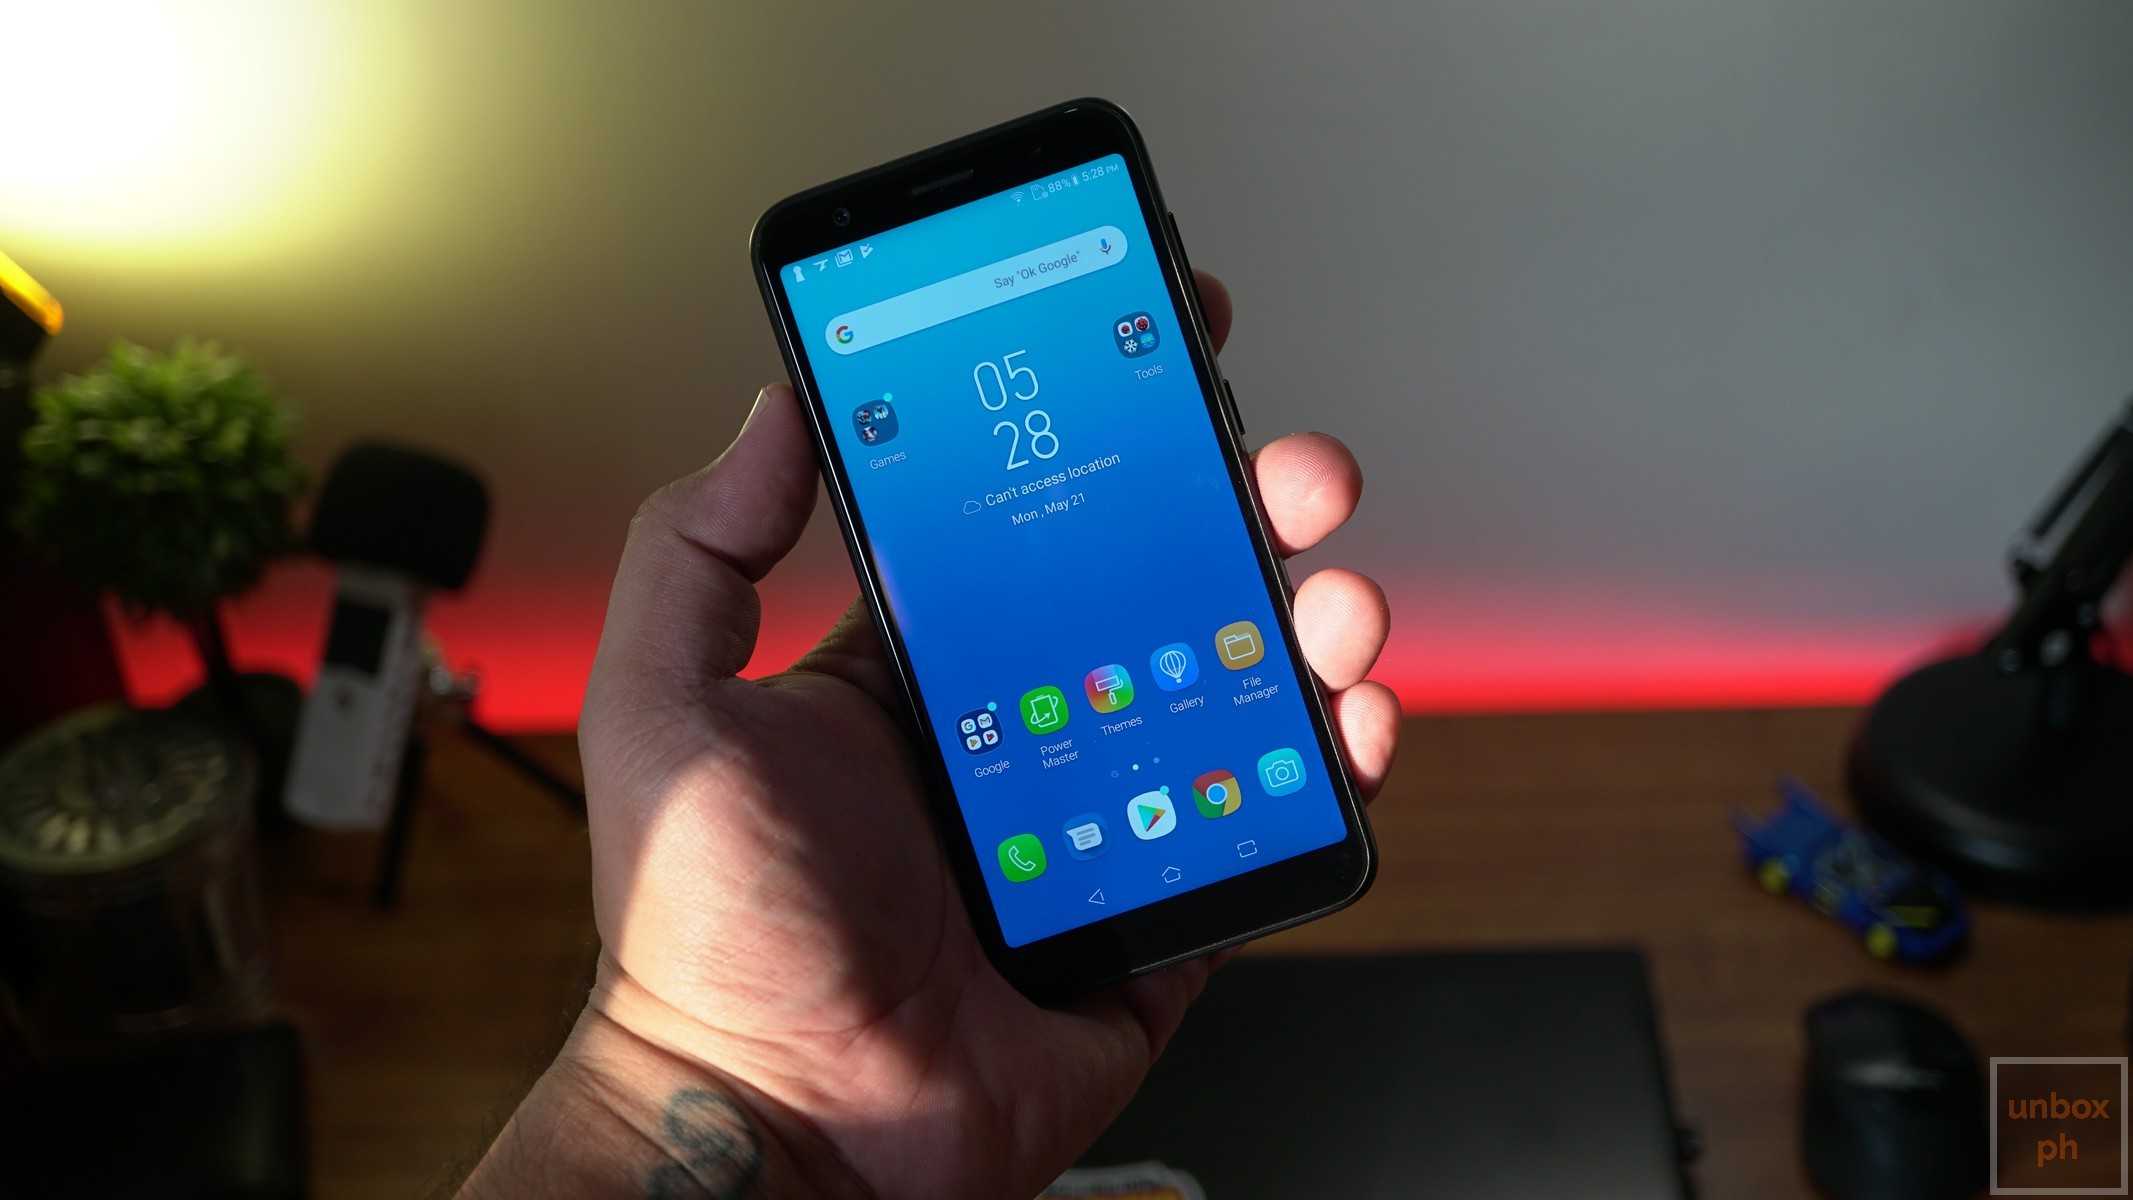 Asus объявляет о запуске новой серии смартфонов zenfone max и представляет zenfone max plus (m1)